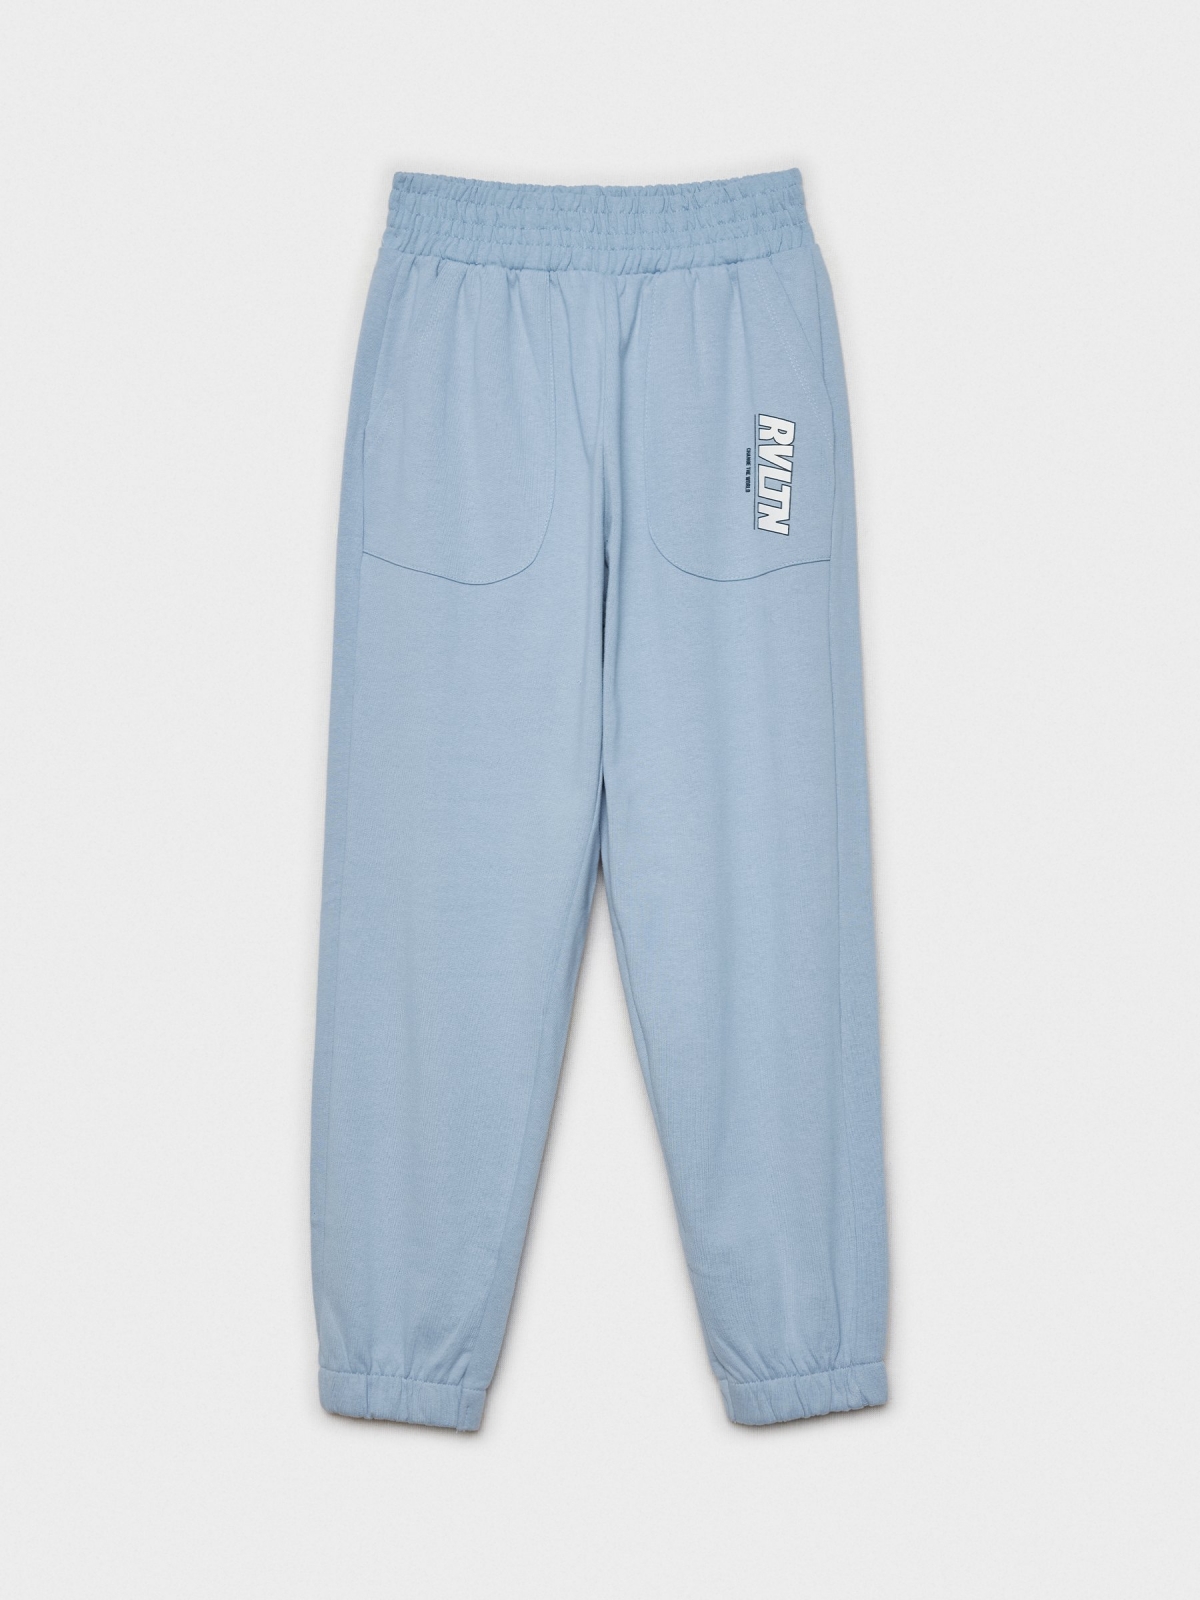  Blue printed jogger pants blue